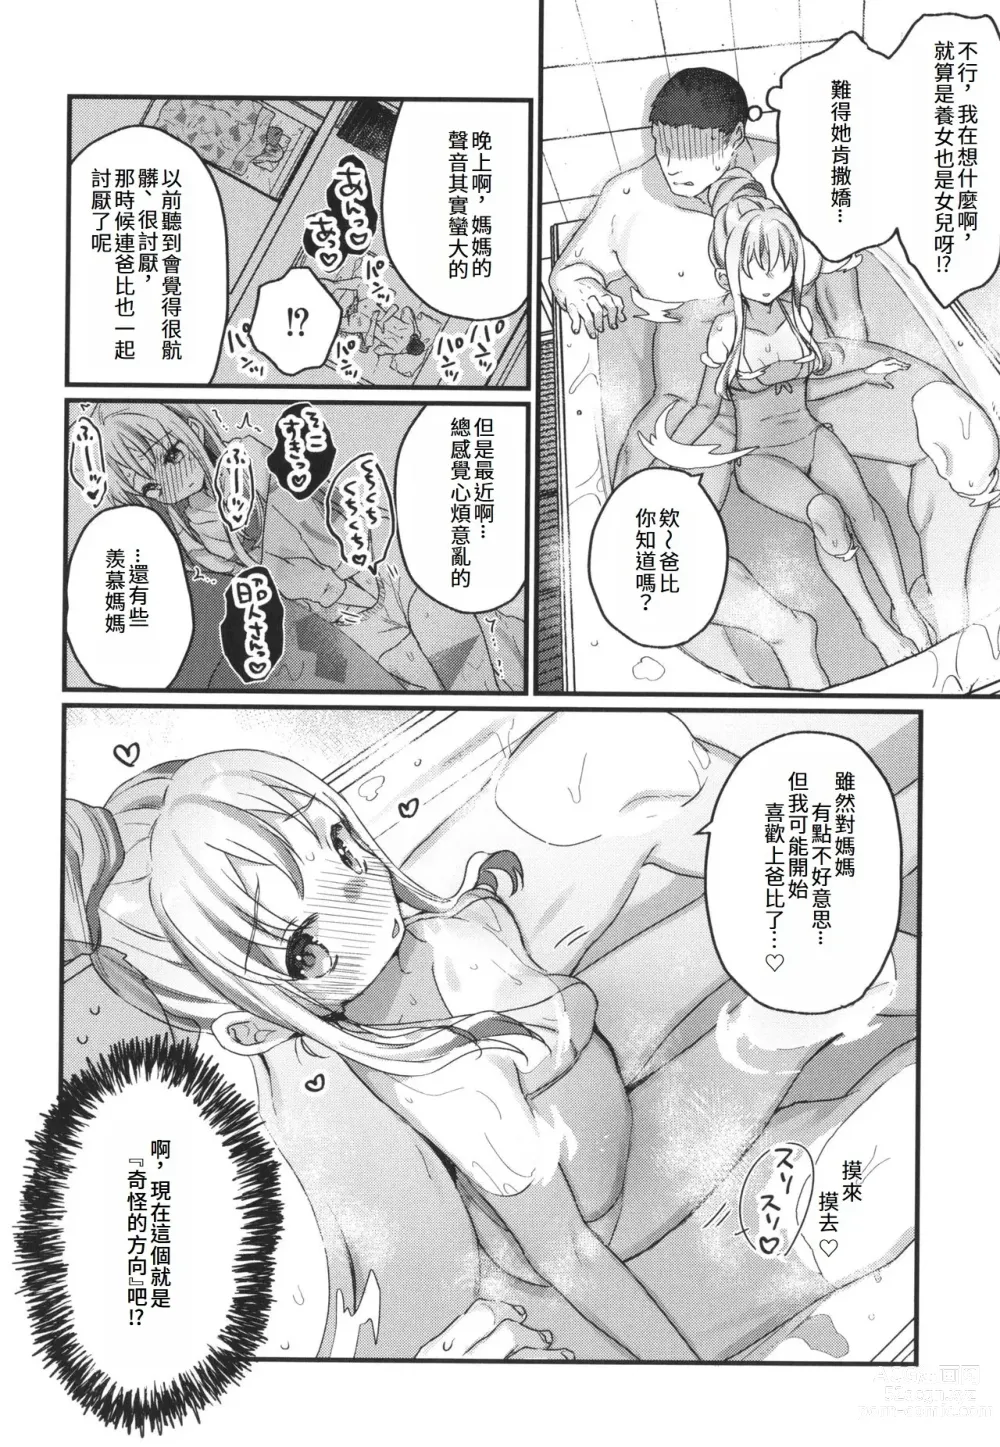 Page 8 of manga 催眠治療太有效了